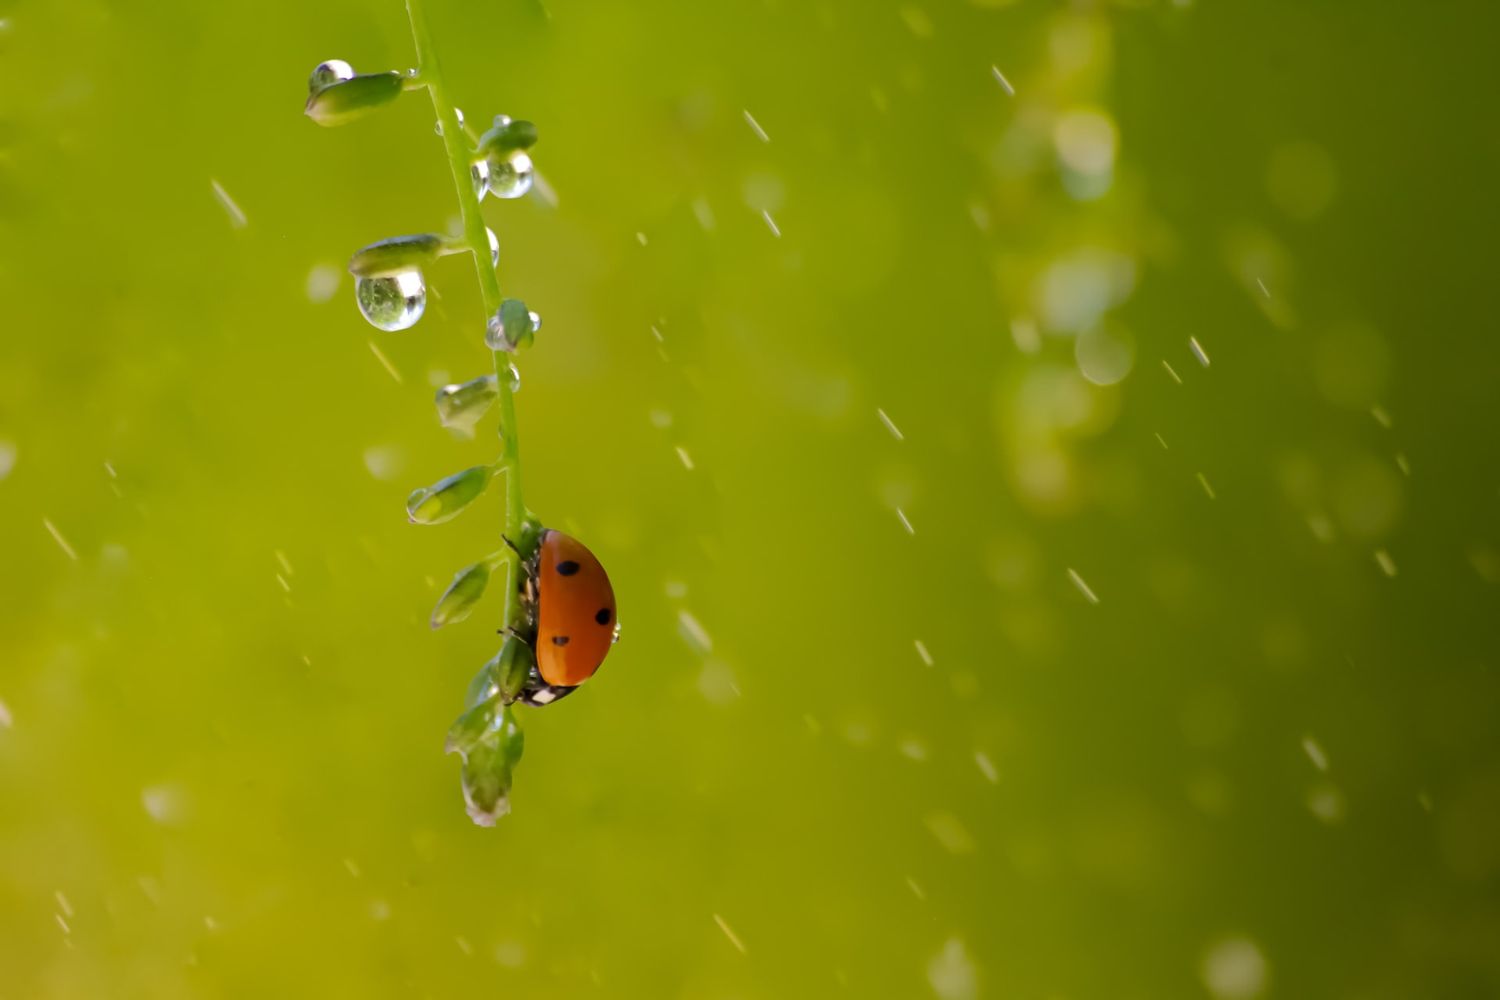 a lalybird walking on tini branch in the rain Photo by Simon Kuznetsov on Unsplash